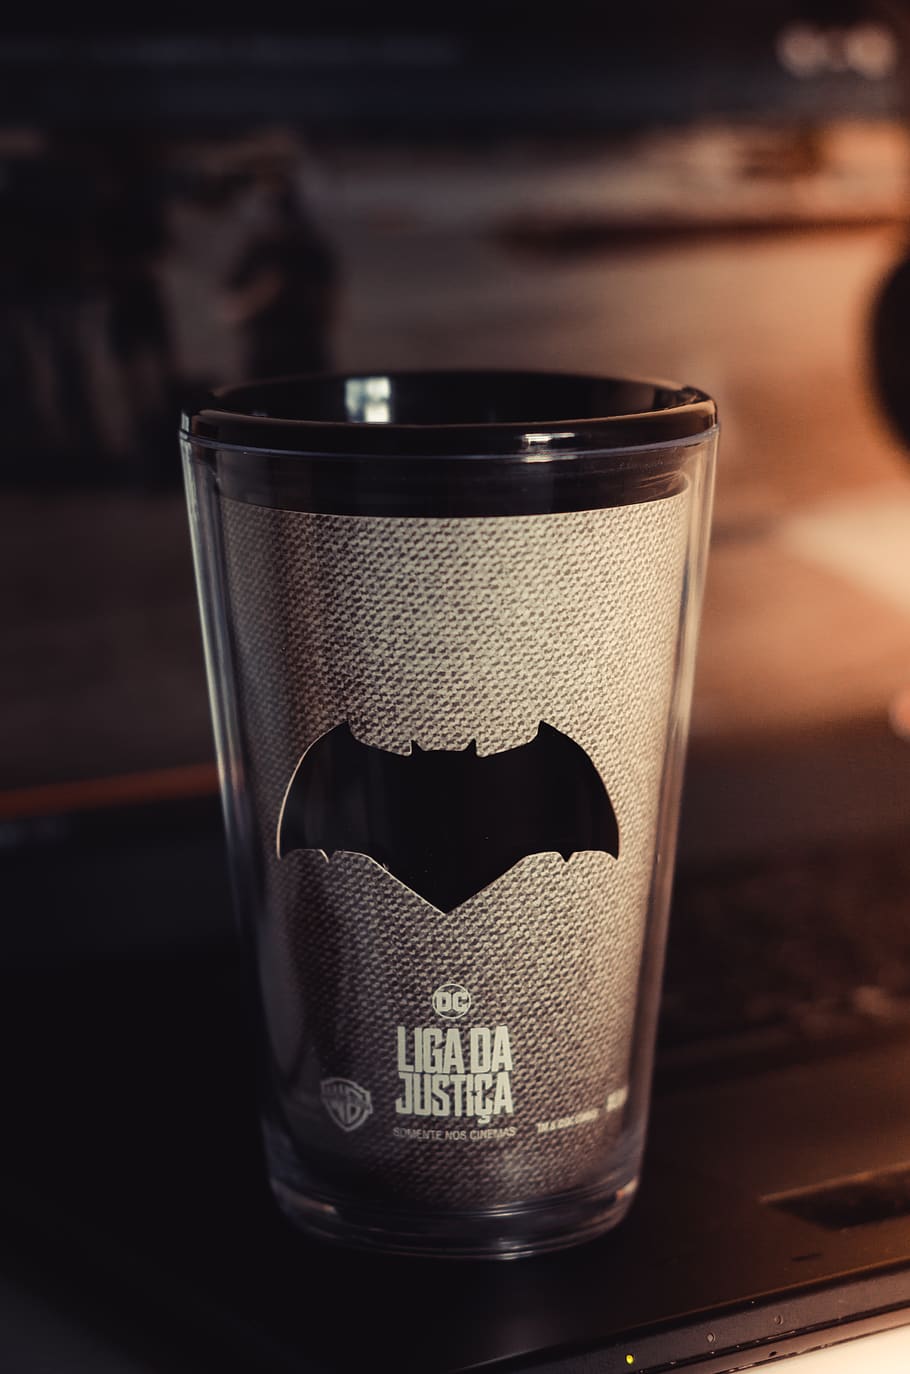 HD wallpaper: Gray and Black Batman Tumbler, close-up, container, cup, dark  | Wallpaper Flare